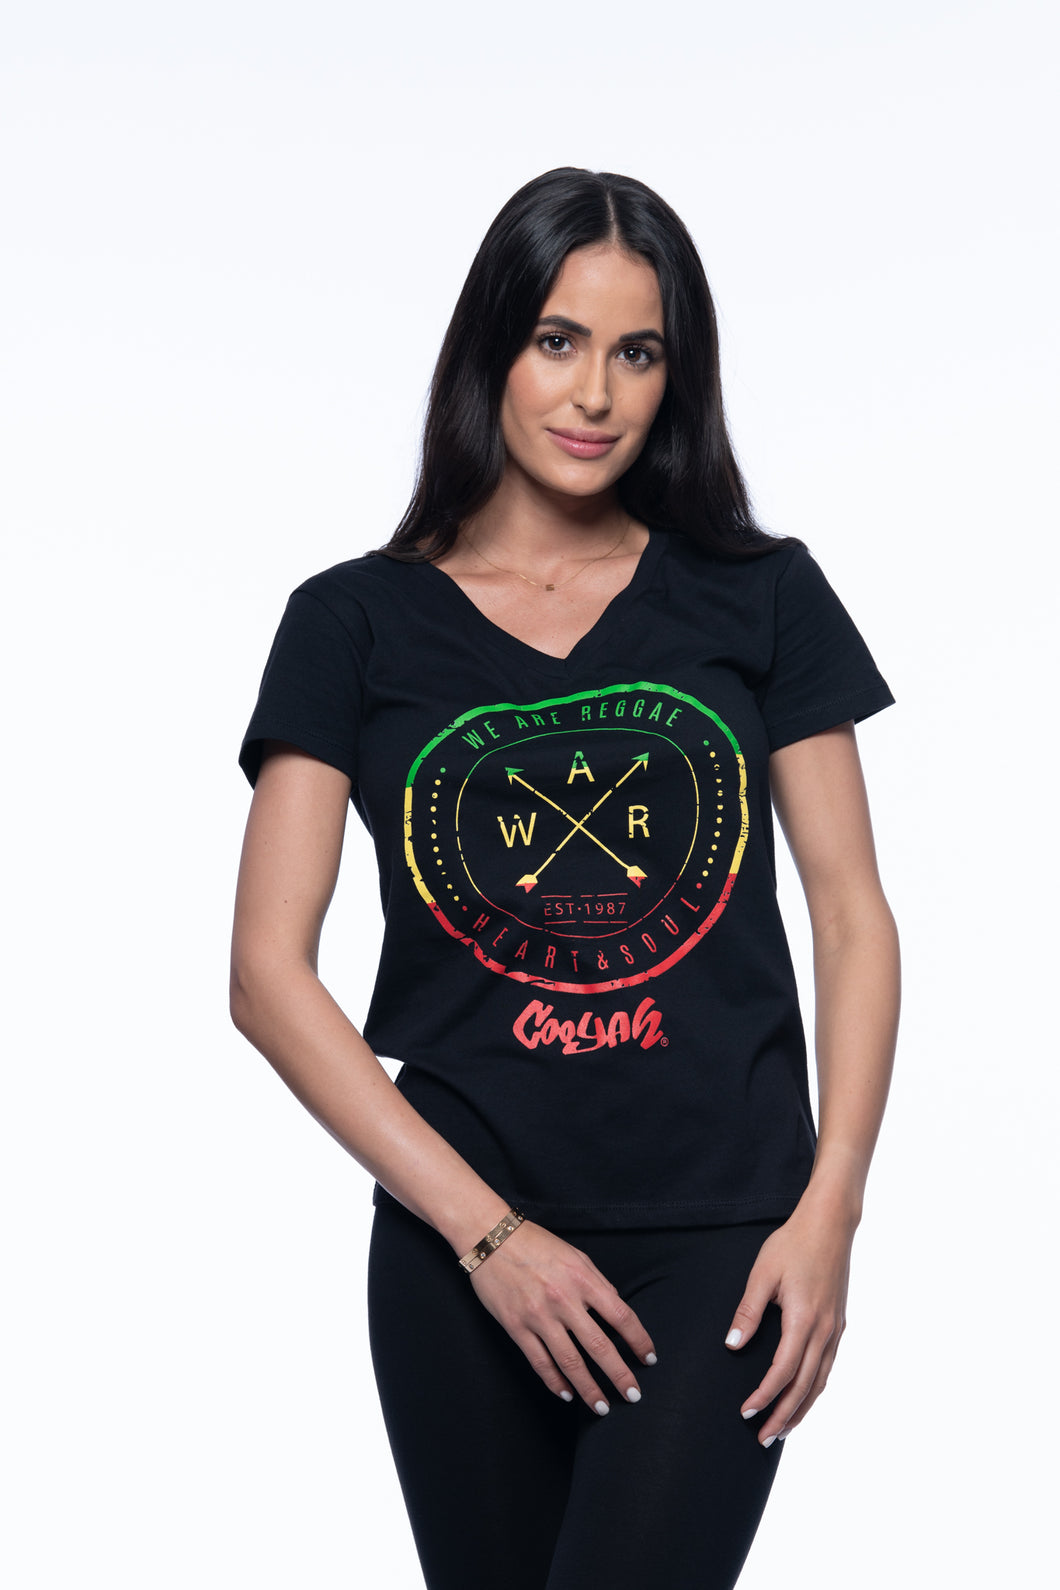 Cooyah Jamaica.  We Are Reggae T-Shirt.  Women's short sleeve, v-neck, tee with rasta colors graphics.  Jamaican clothing brand.  IRIE